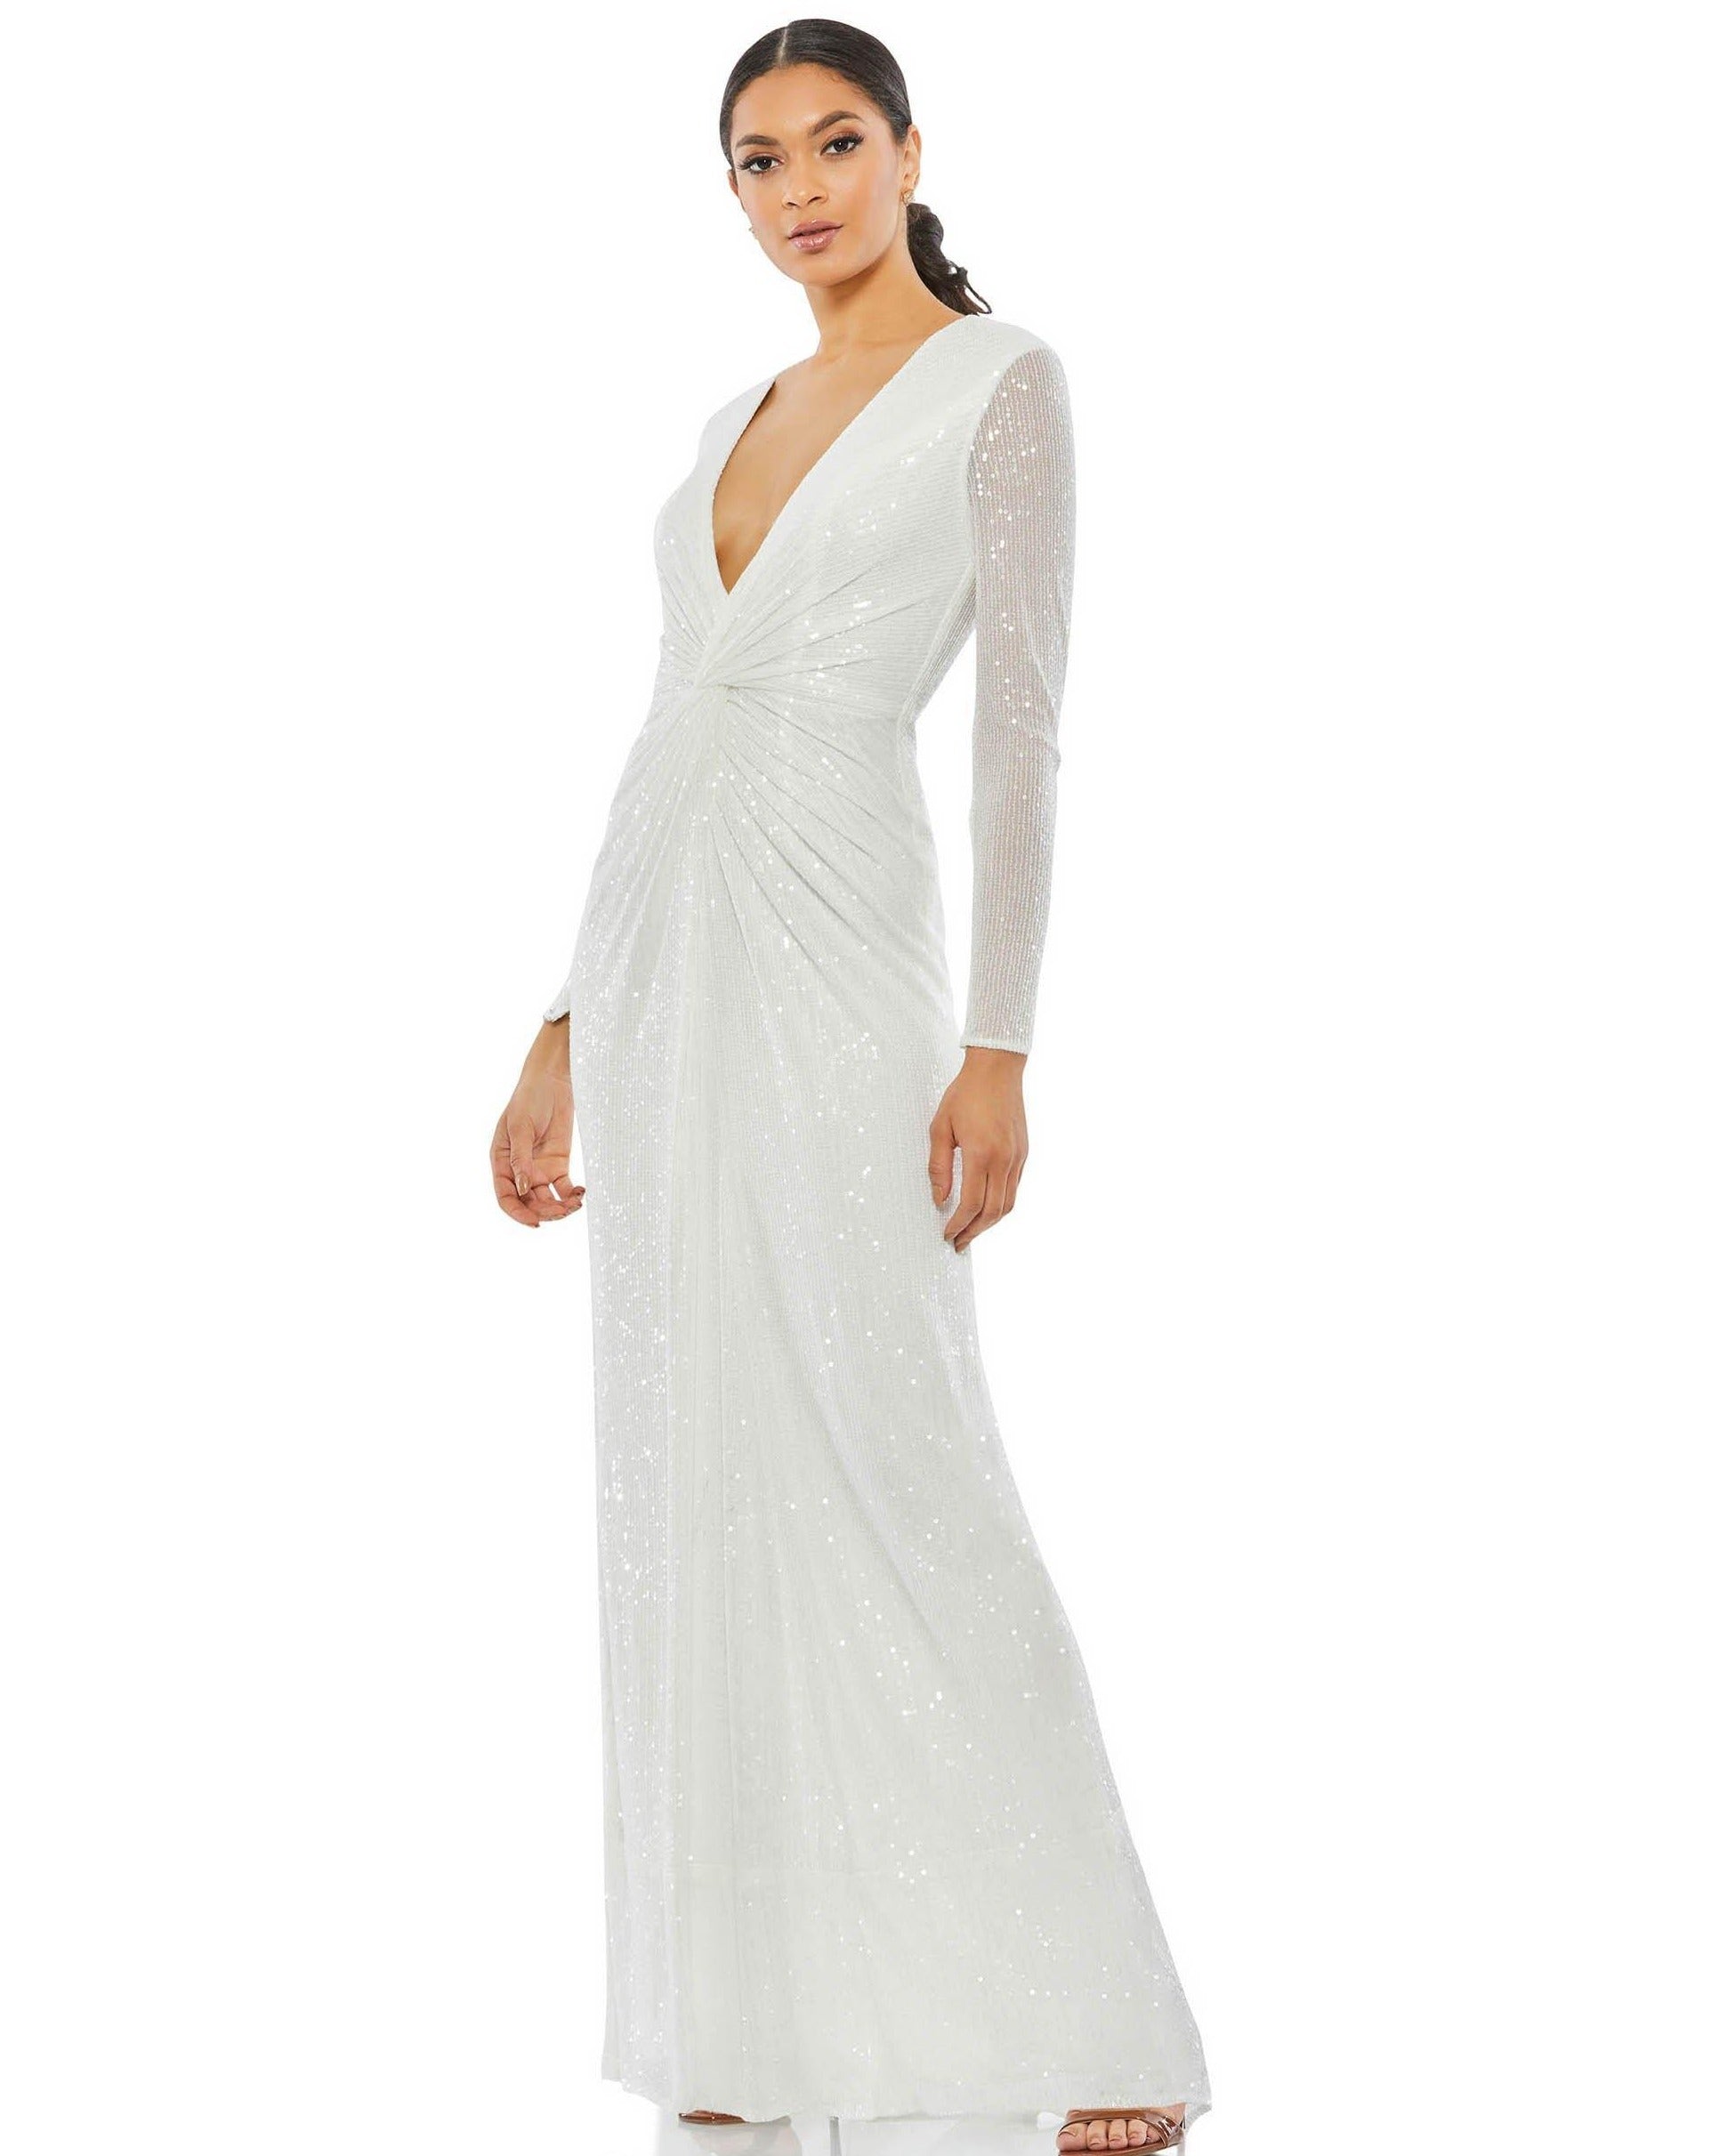 Mac Duggal Long Sleeve Formal Evening Dress 26552 - The Dress Outlet